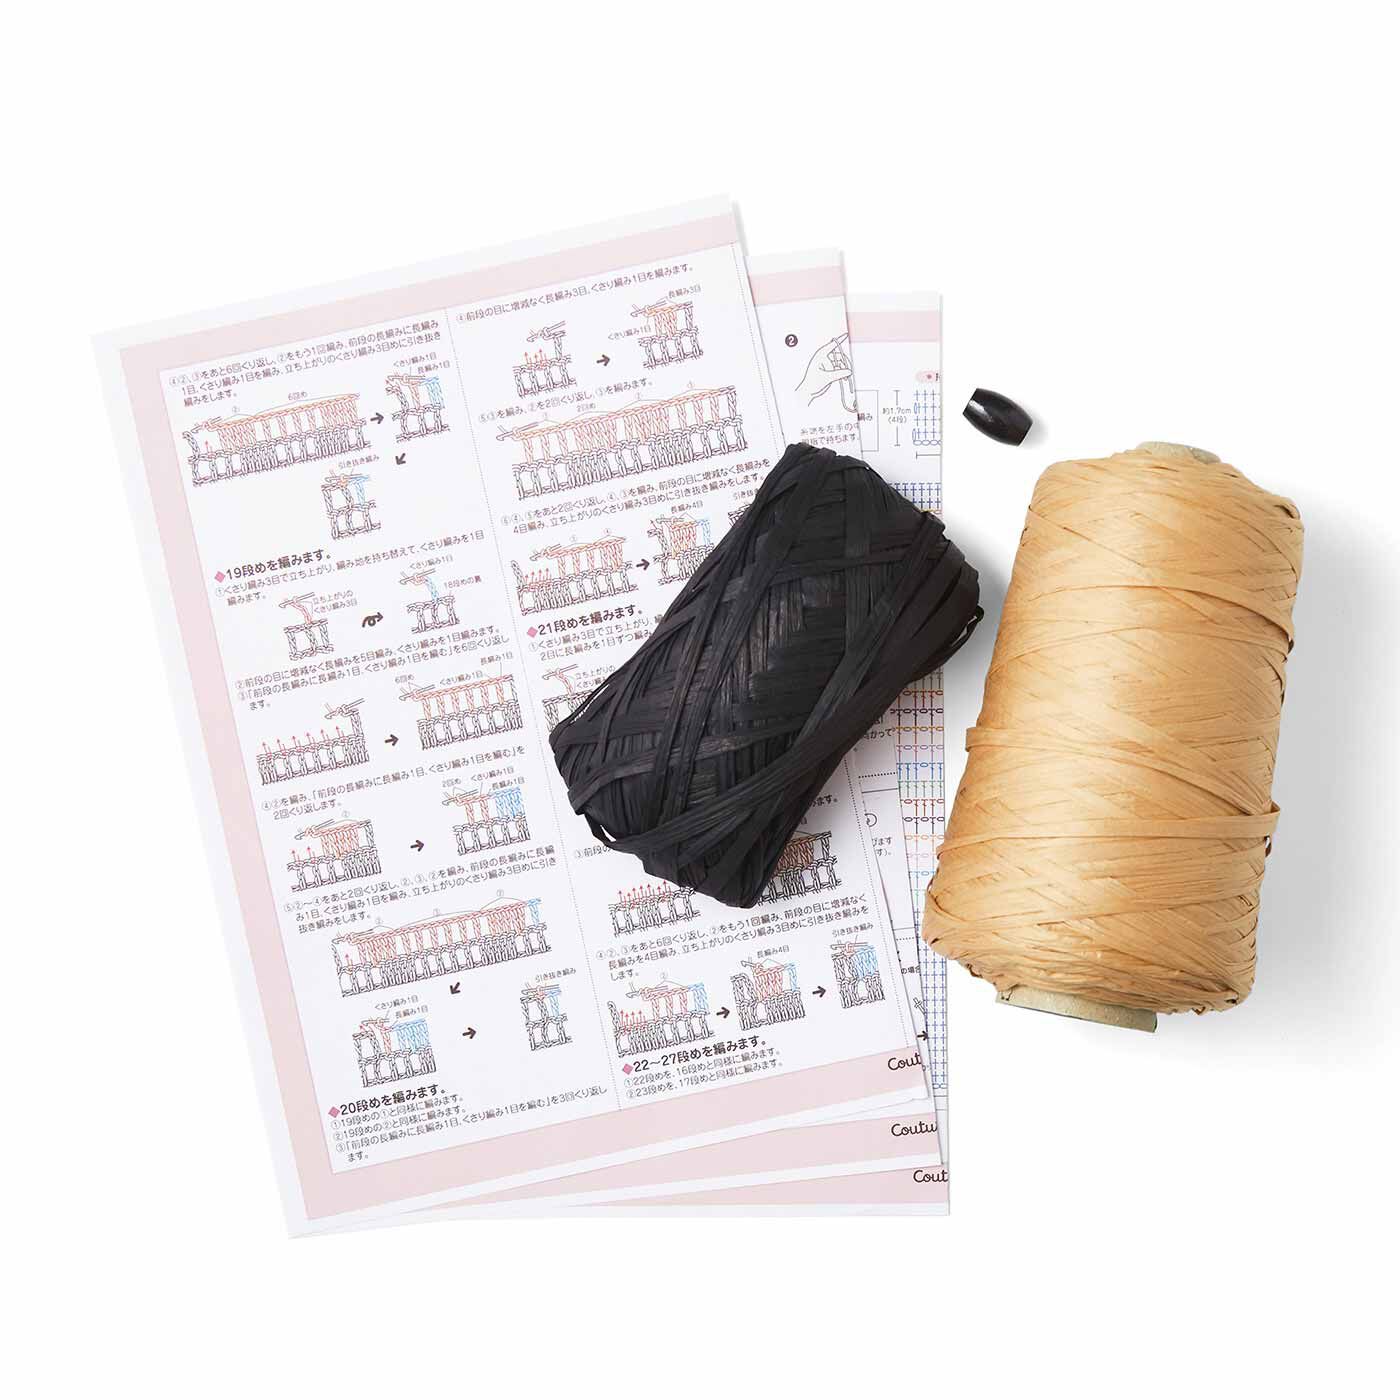 Couturier|軽くて丈夫なマニラヘンプヤーンで編む かぎ針編みバッグの会|●1回分のお届けキット例です。